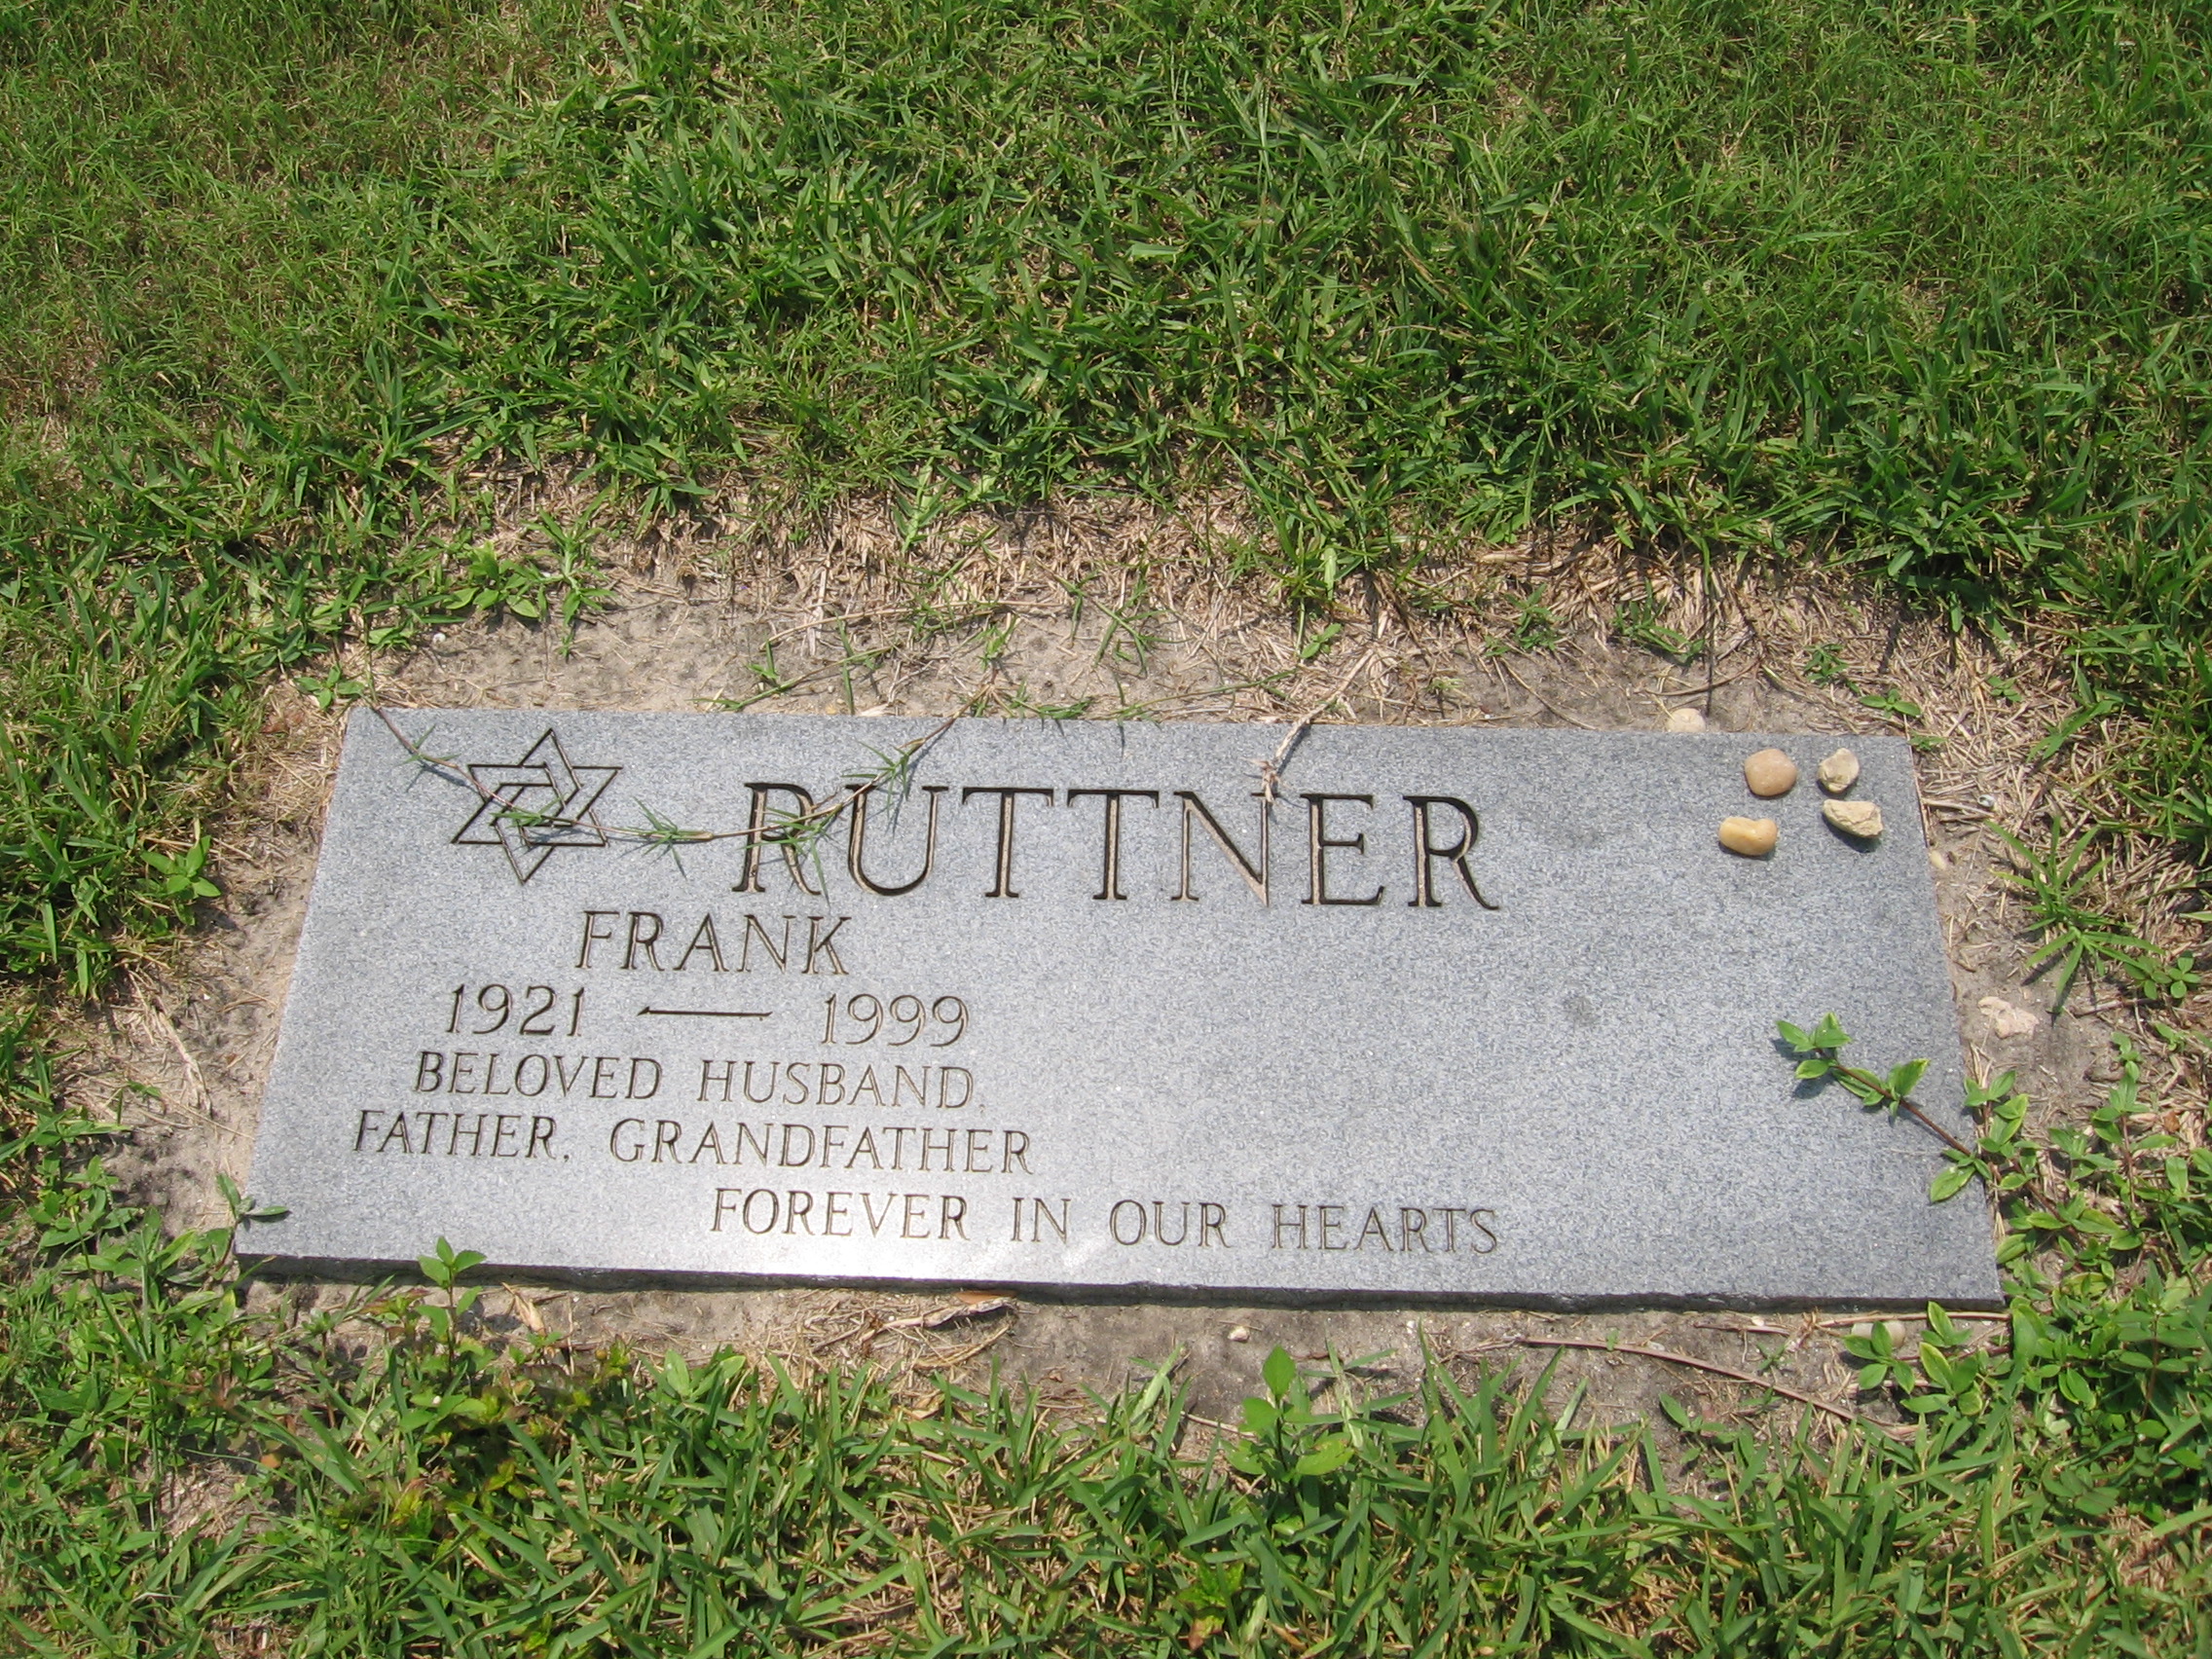 Frank Ruttner